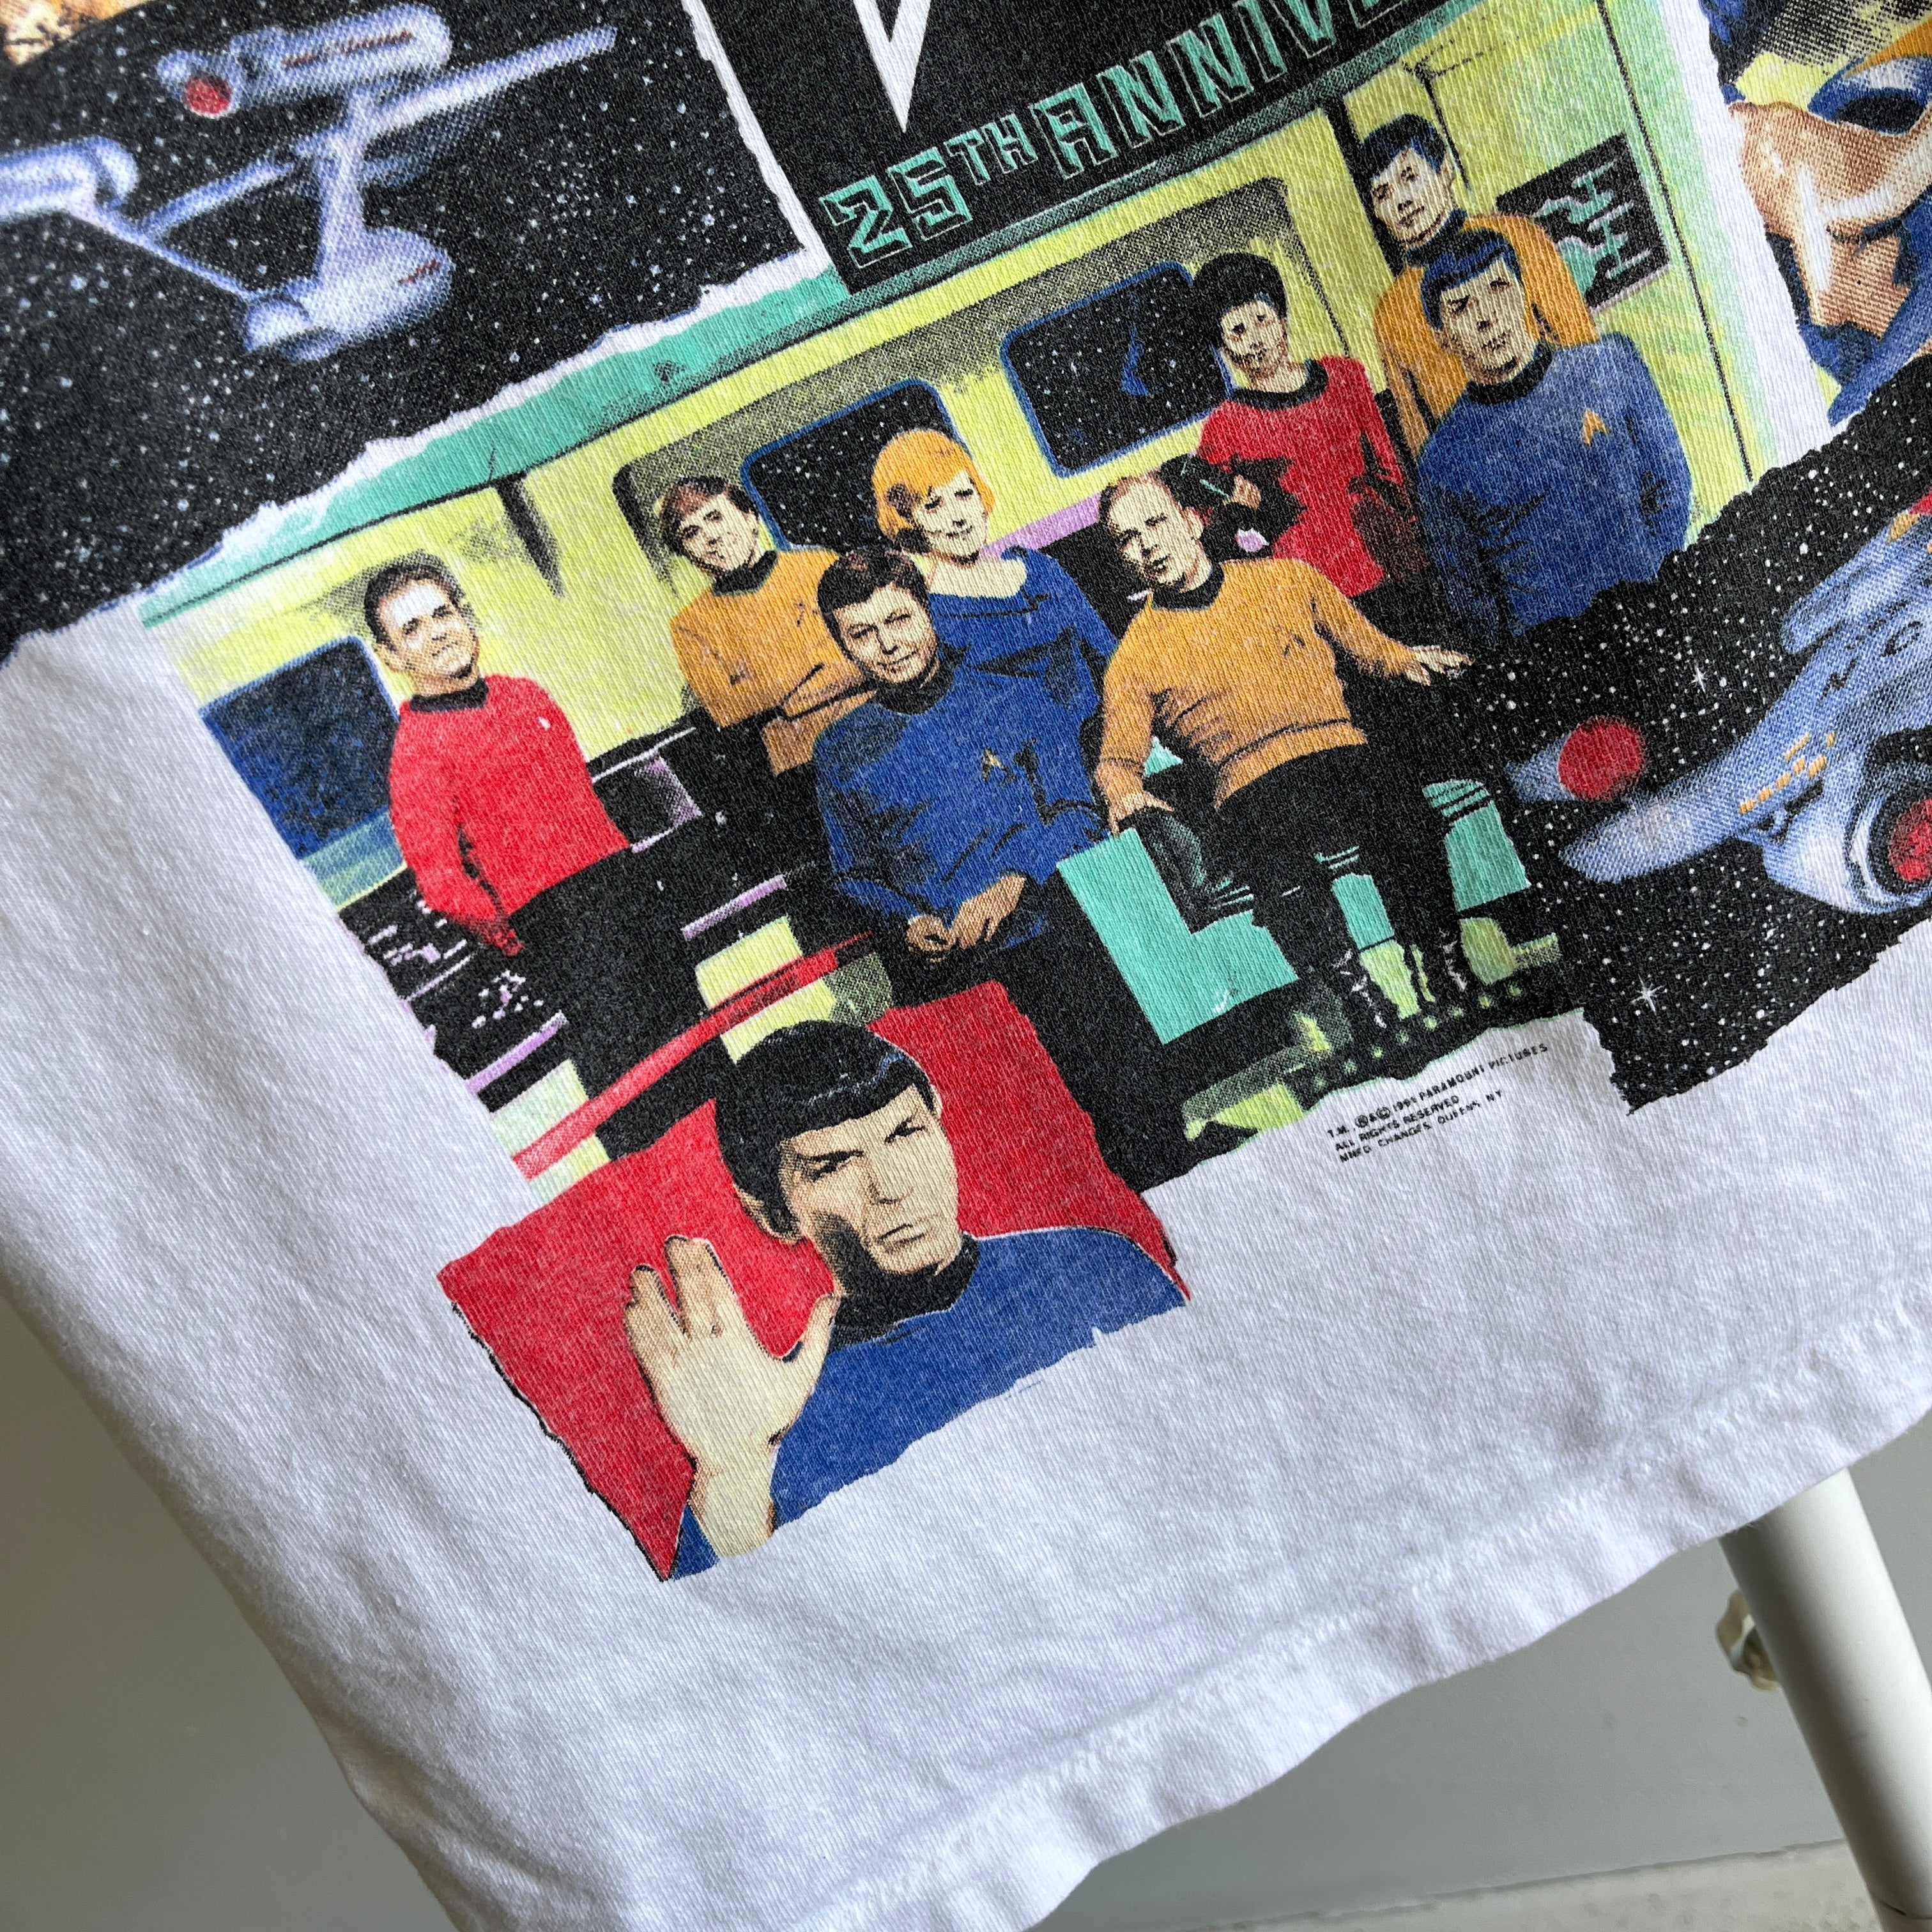 1991 Star Trek 25e anniversaire T-shirt